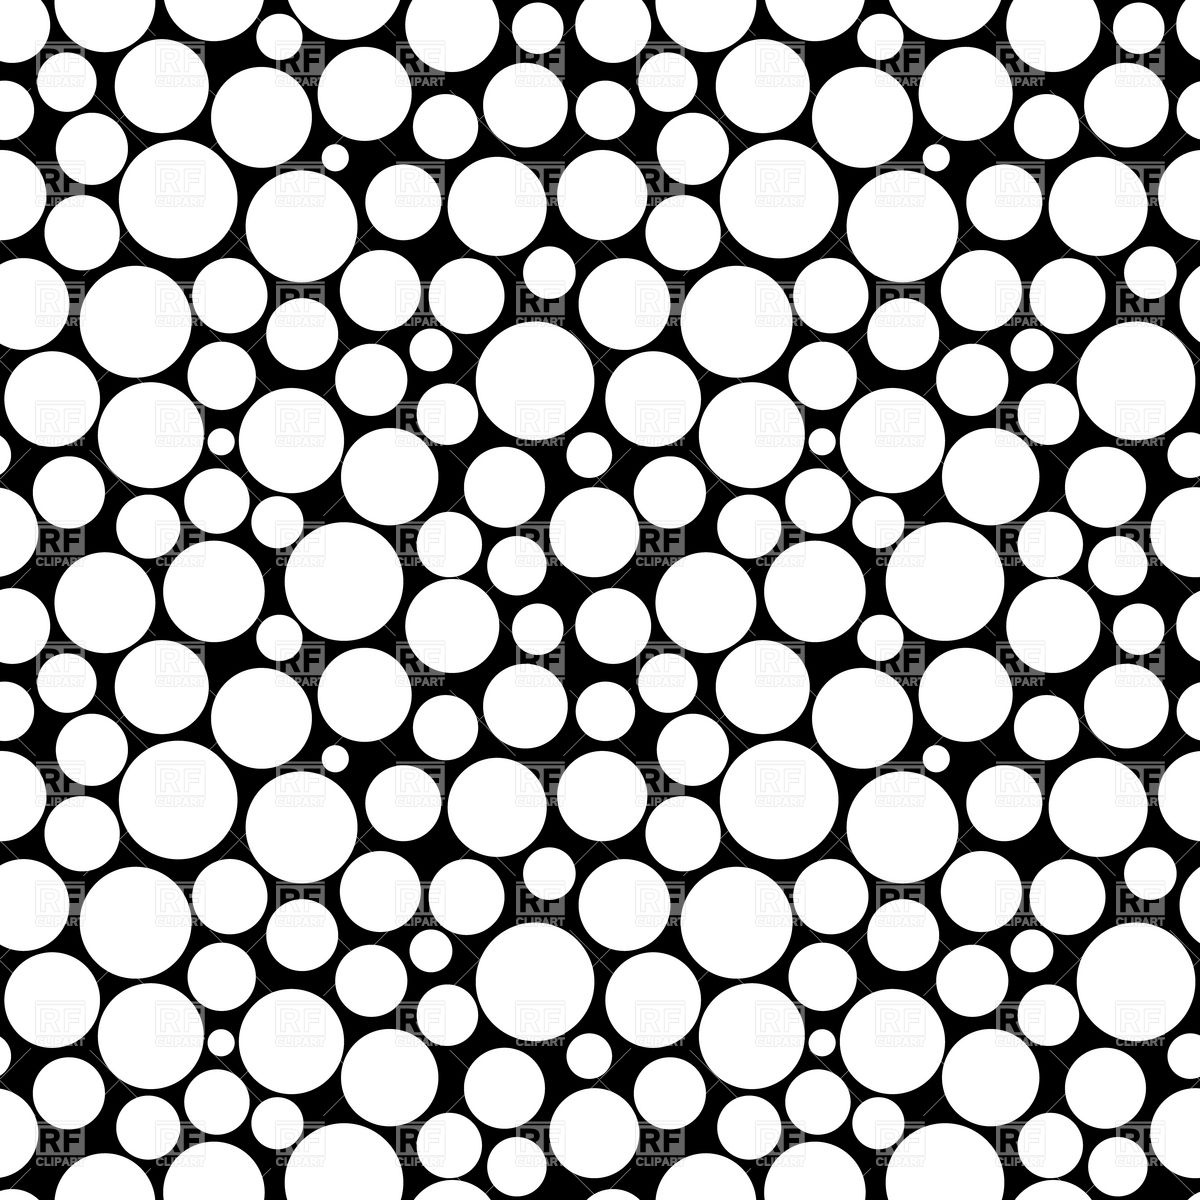 Black And White Bubble Polka Dot Seamless Background